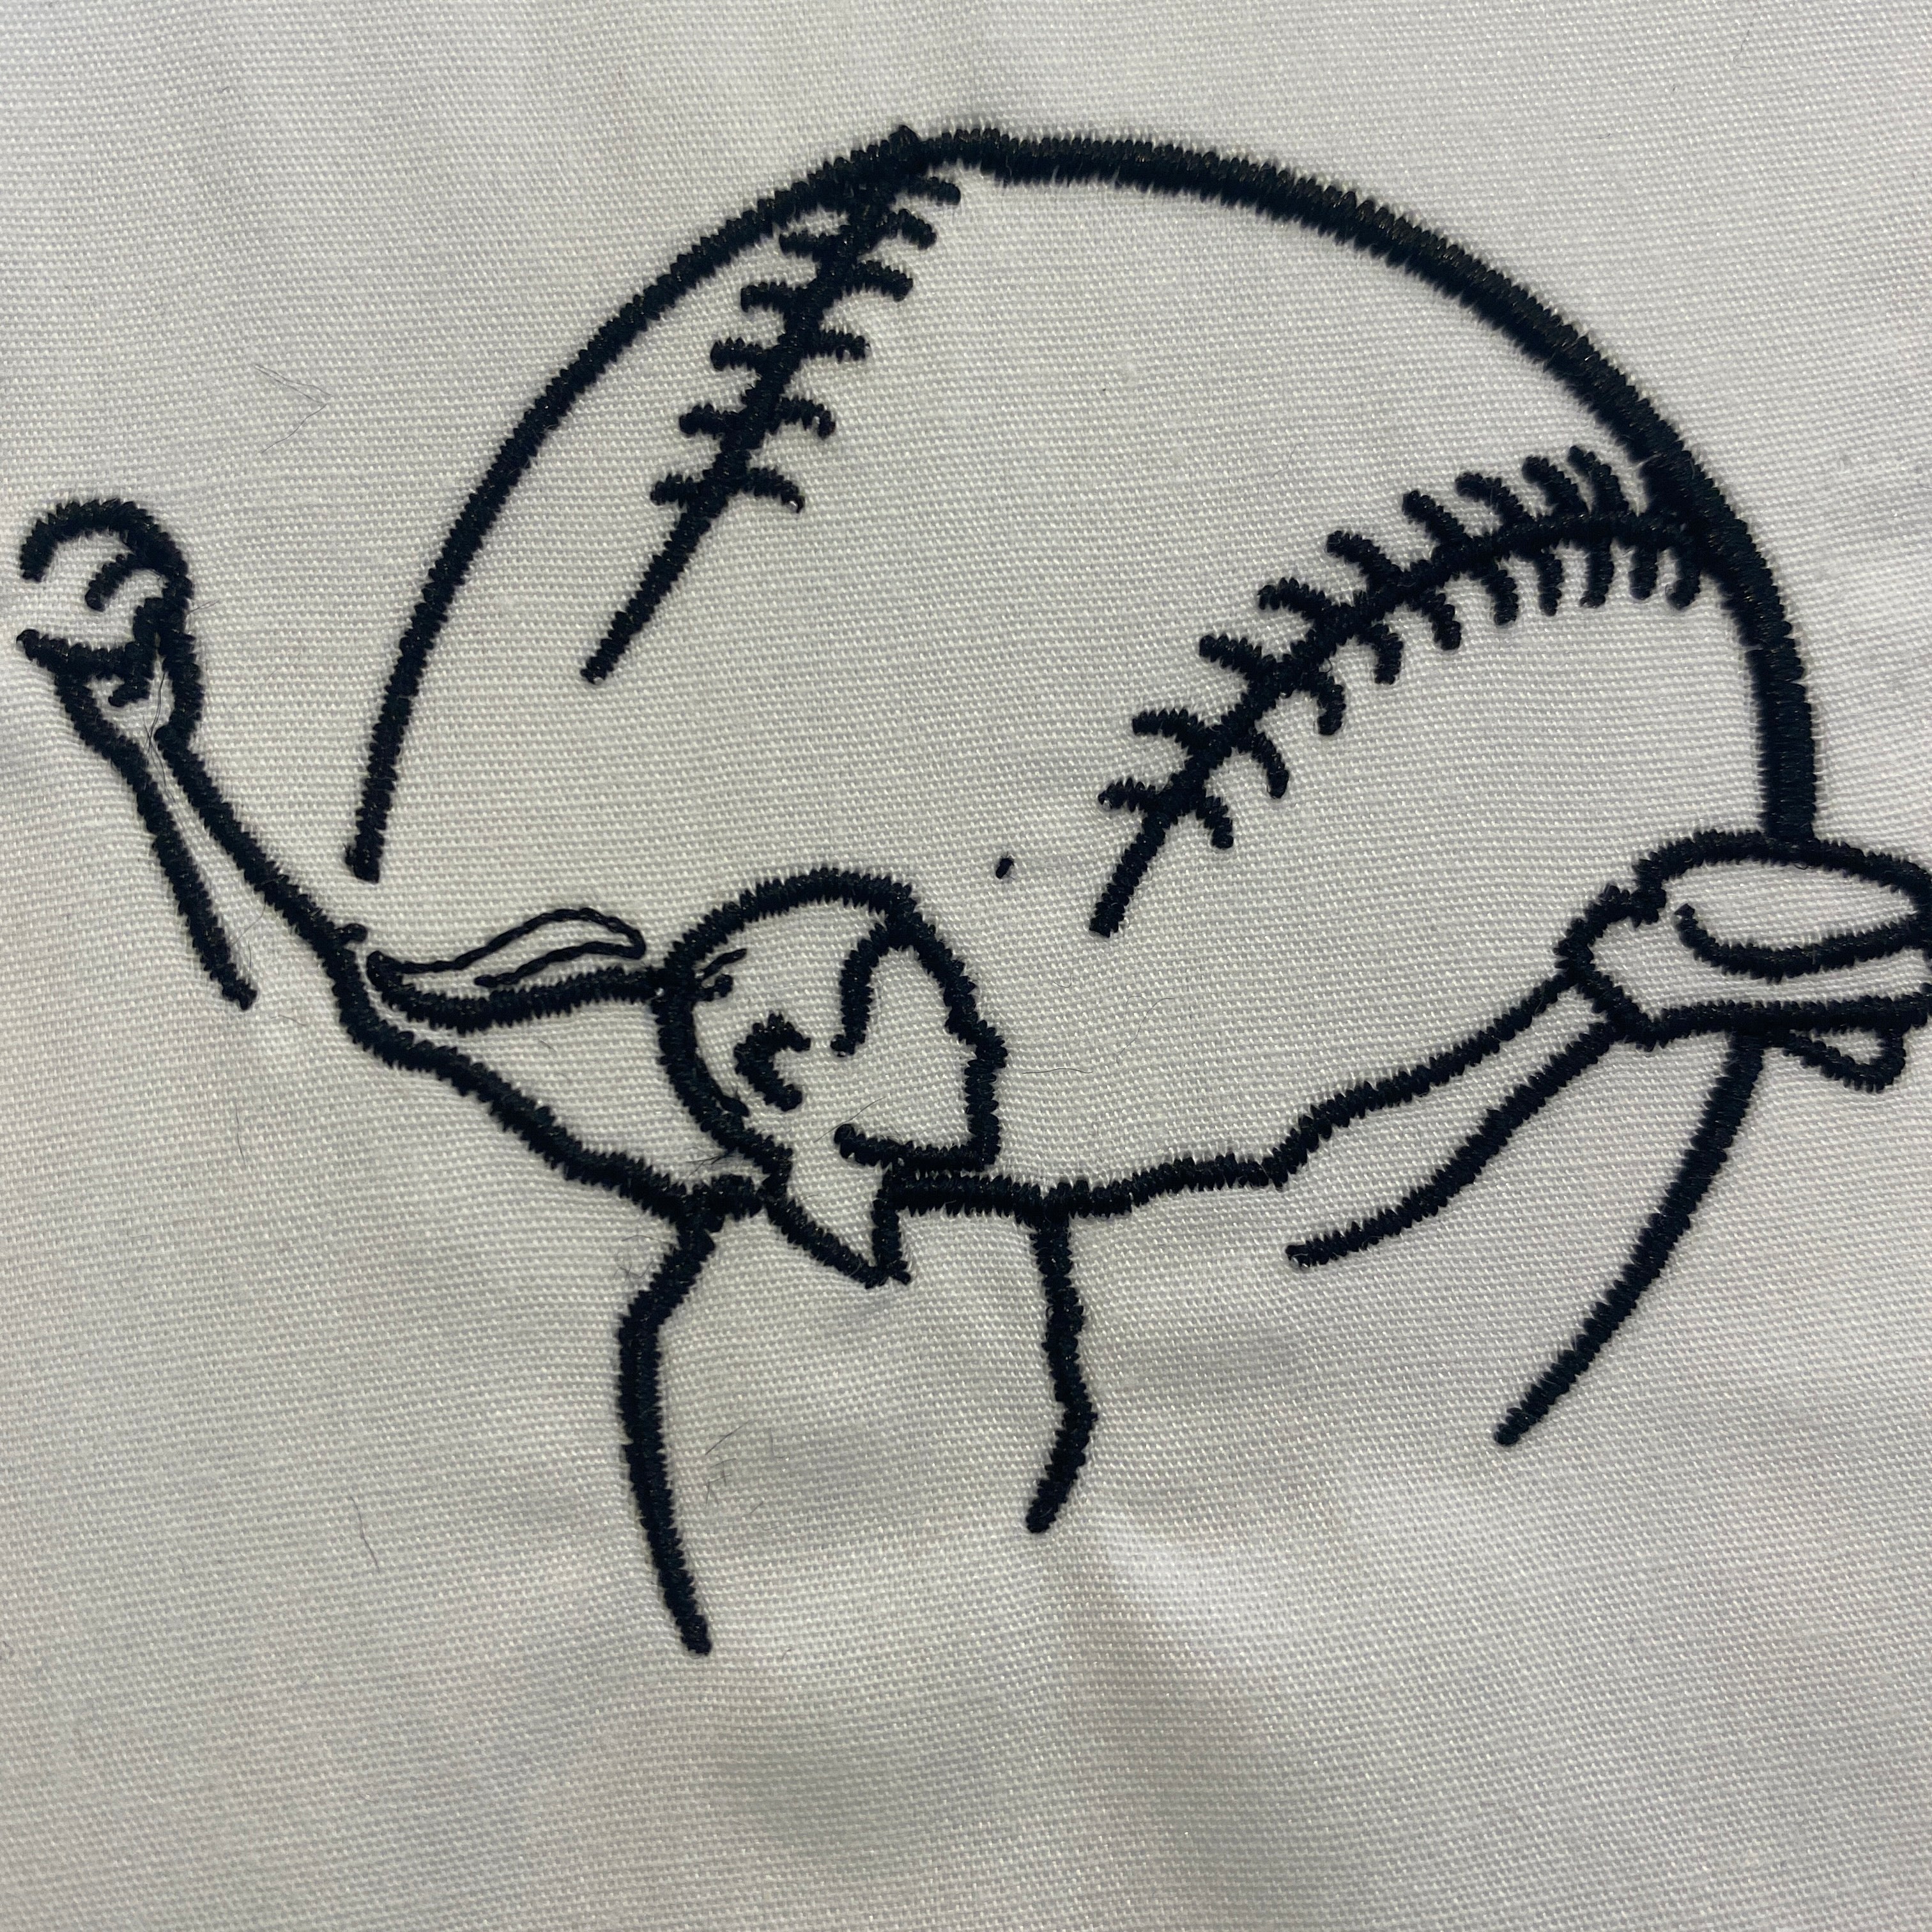 Women's Softball Embroidery Design